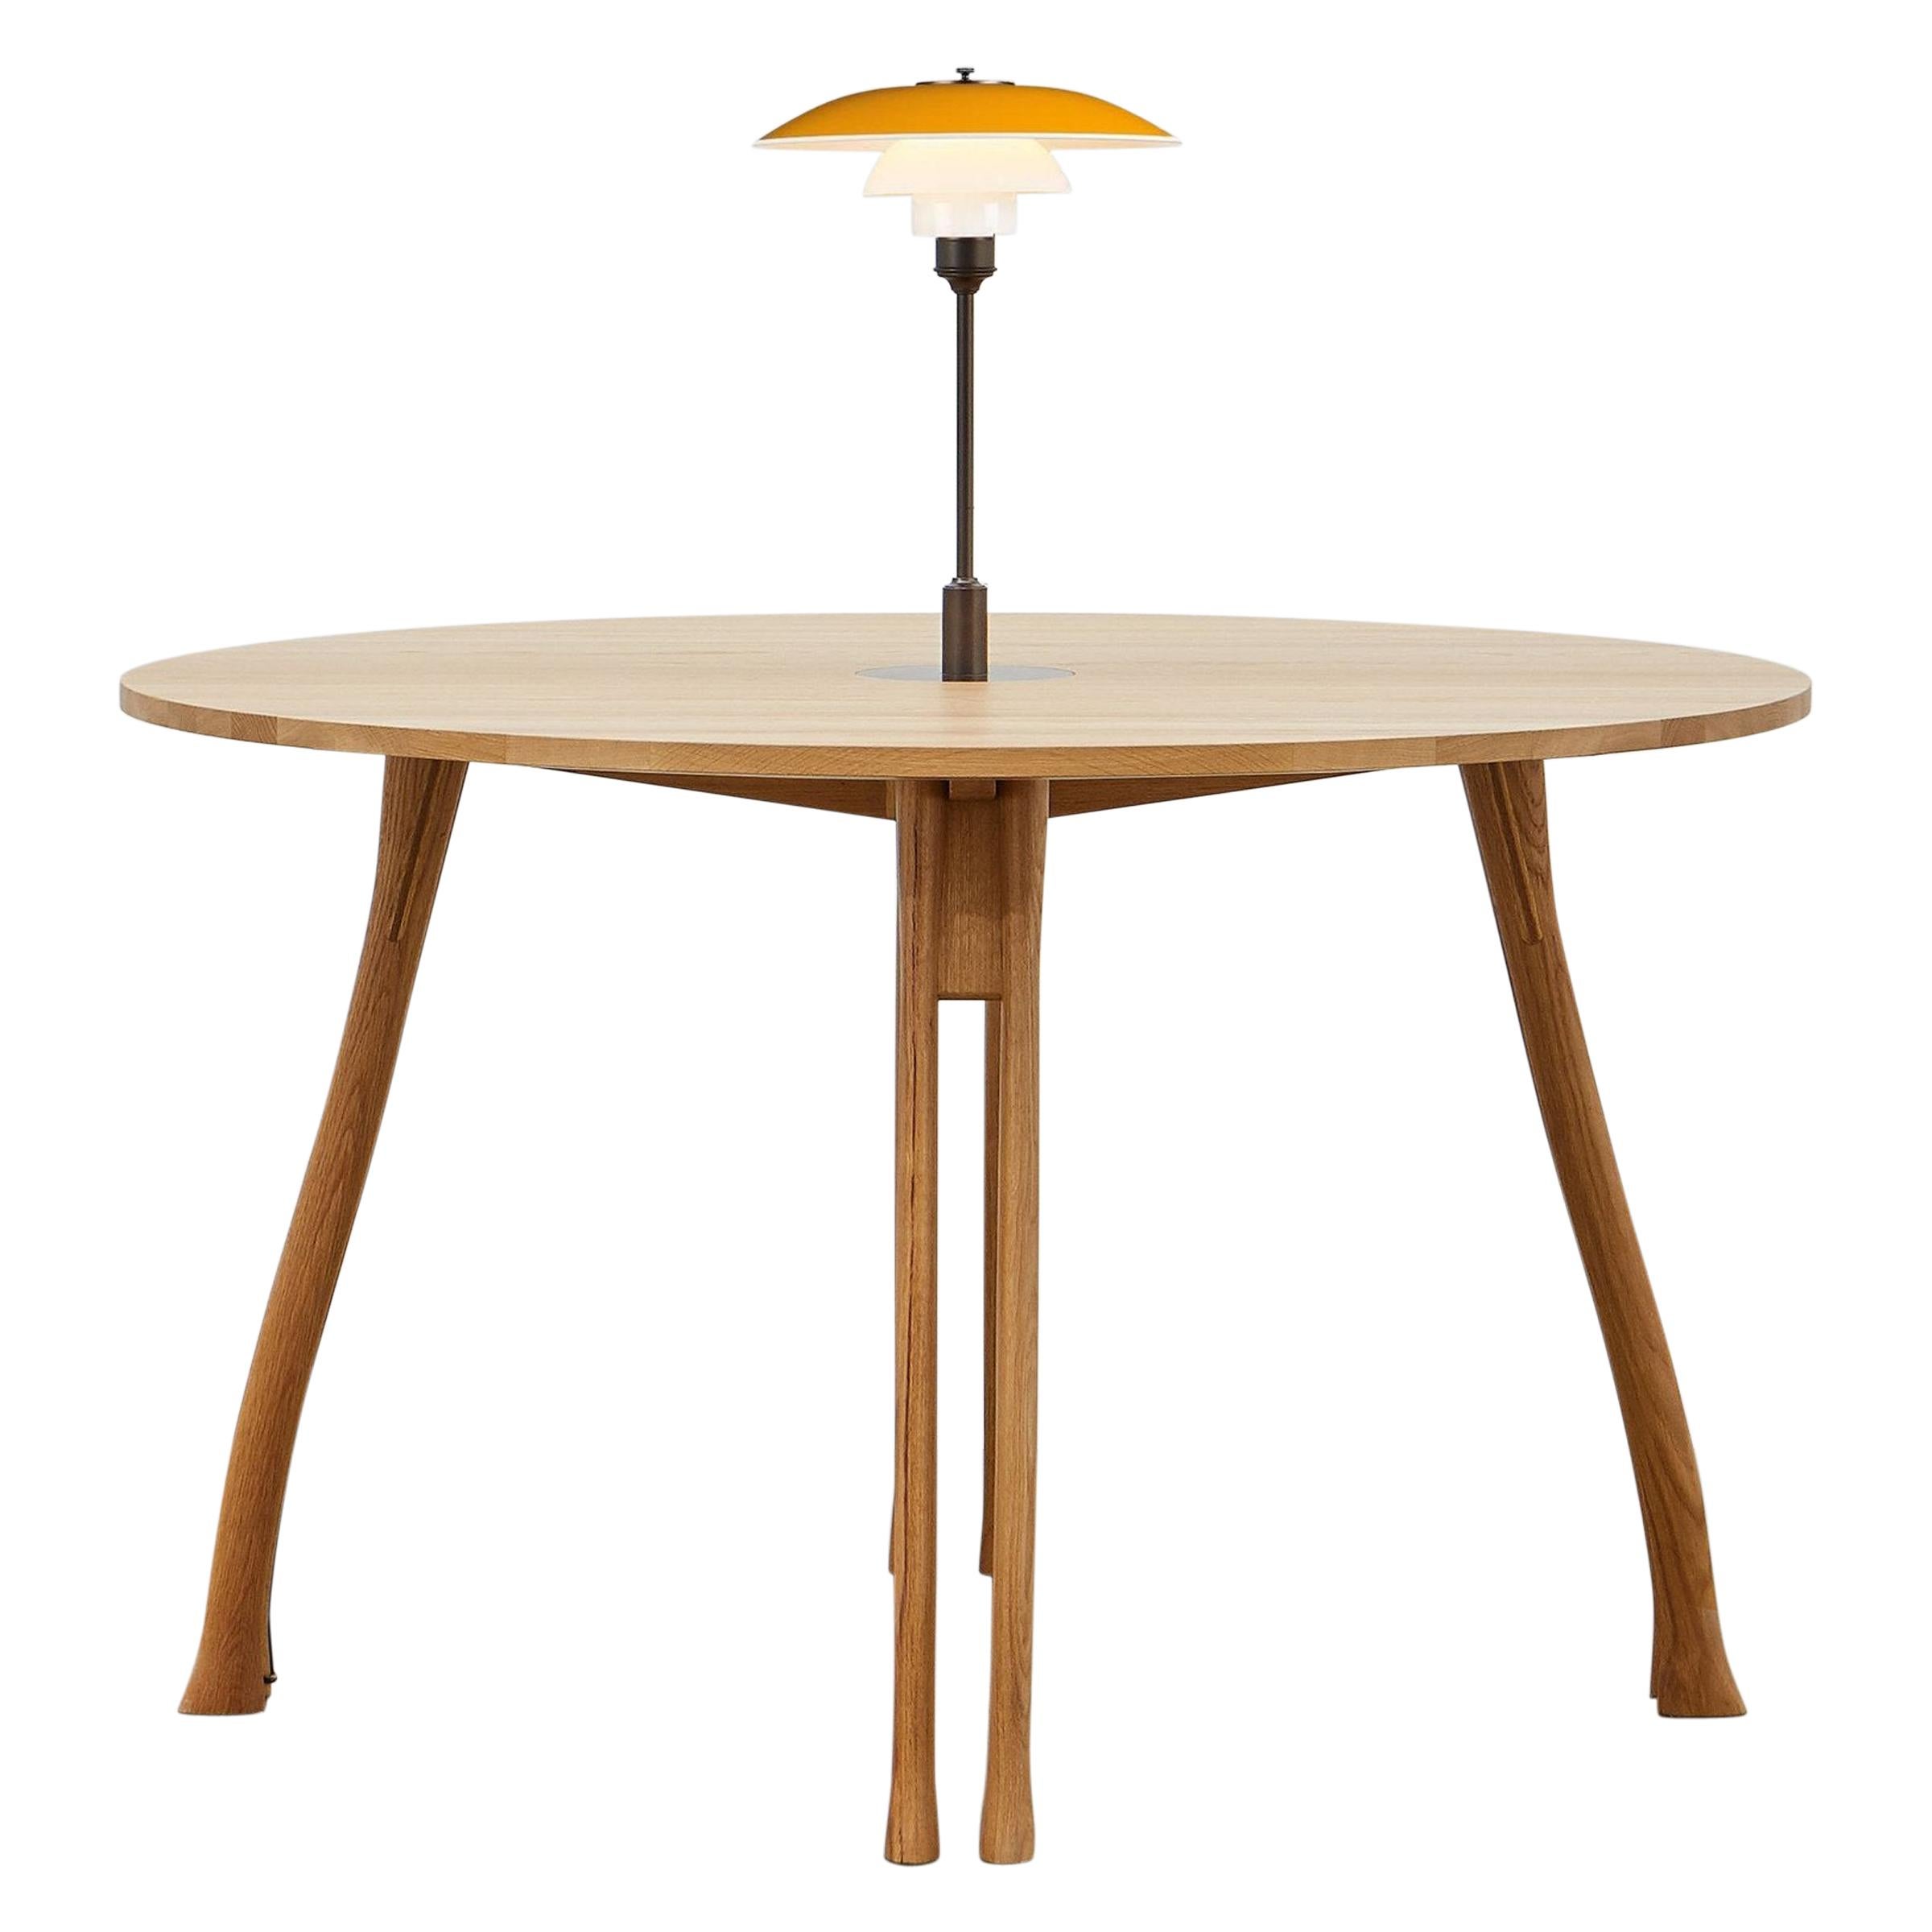 PH Axe Table, natural oak legs, veneer table plate, yellow PH 3 ½ - 2 ½ lamp